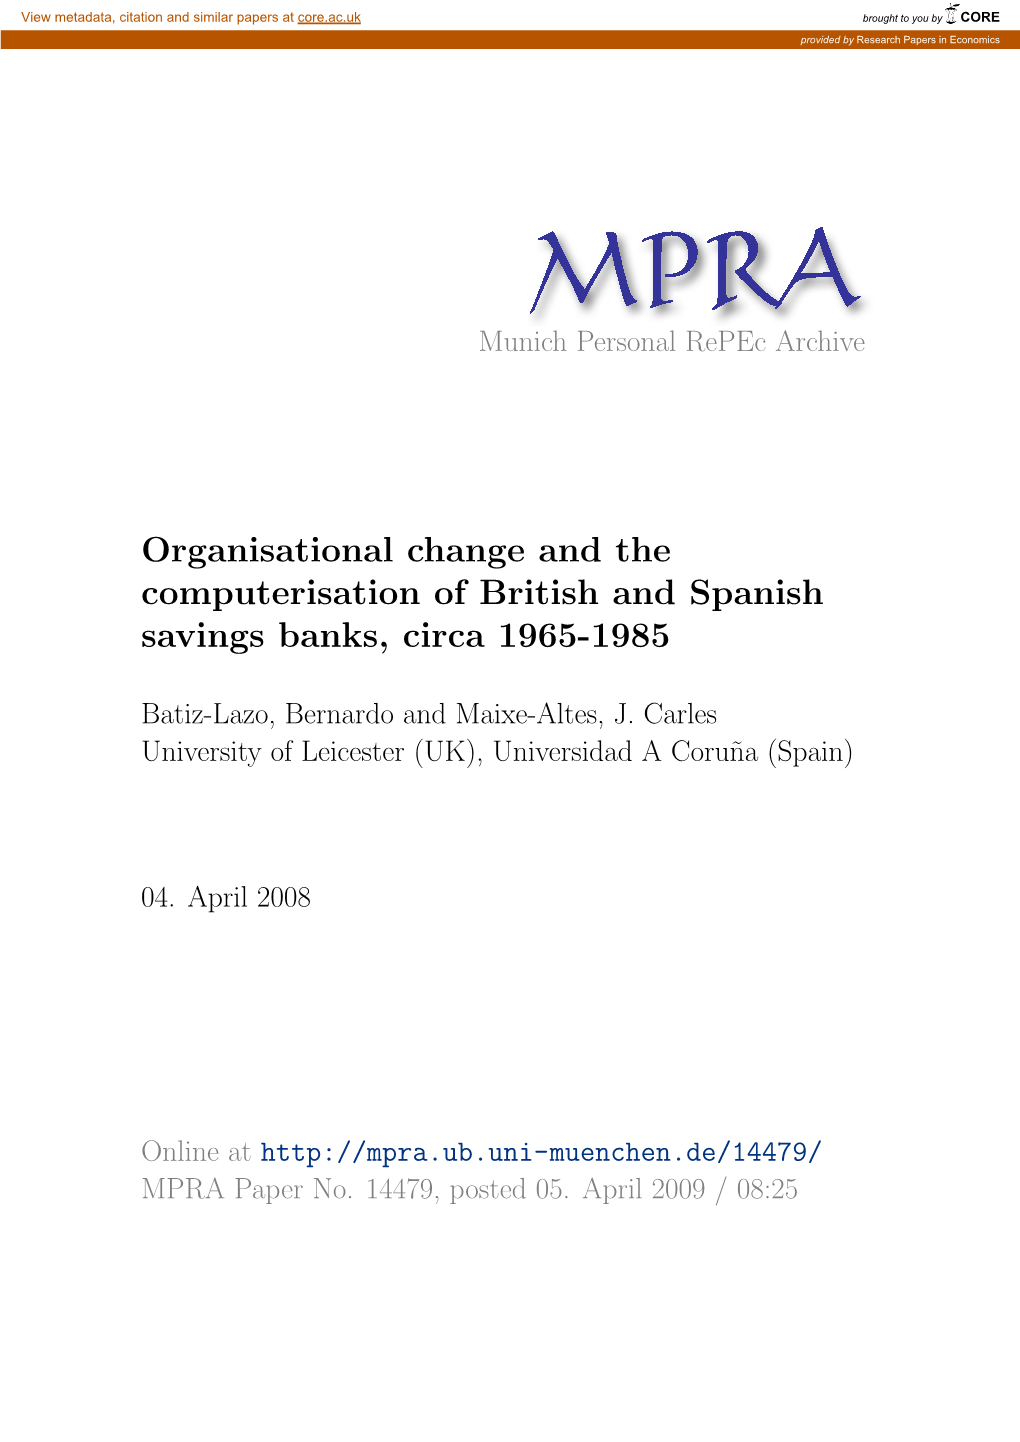 Organisational Change and the Computerisation of British and Spanish Savings Banks, Circa 1965-1985